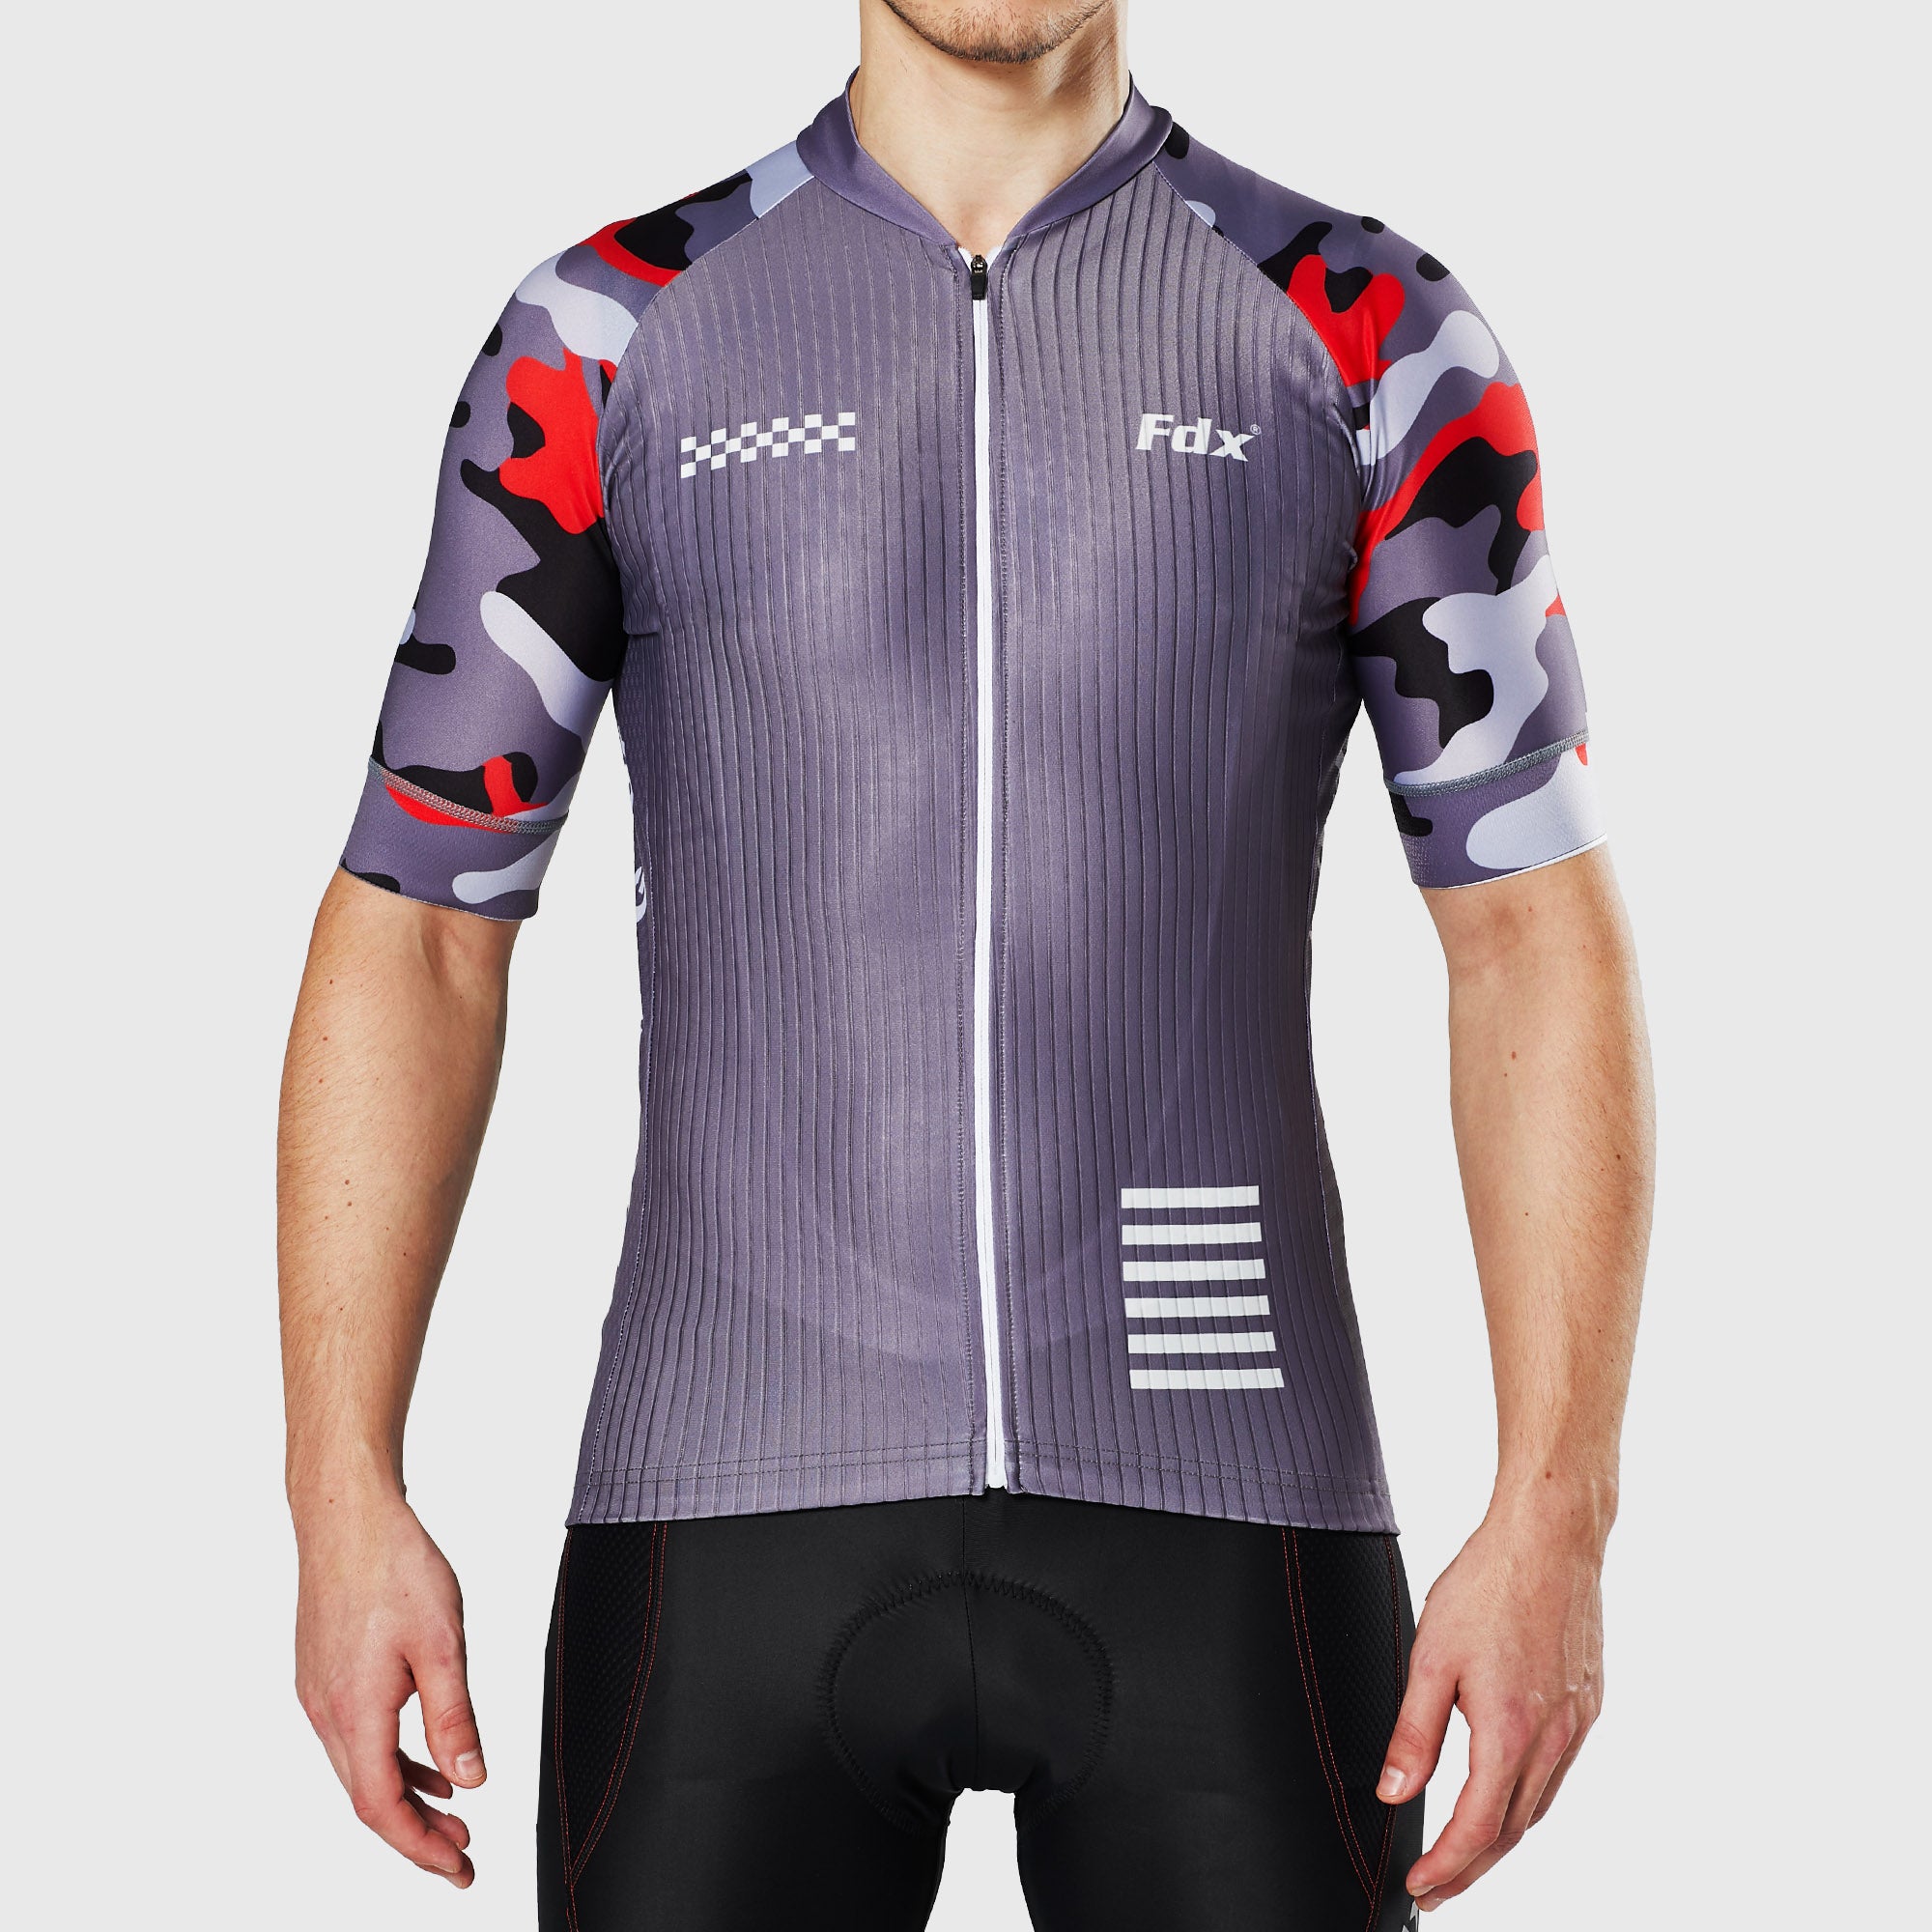 Fdx Mens Grey Short Sleeve Cycling Jersey for Summer Best Road Bike Wear Top Light Weight, Full Zipper, Pockets & Hi-viz Reflectors - Camouflage